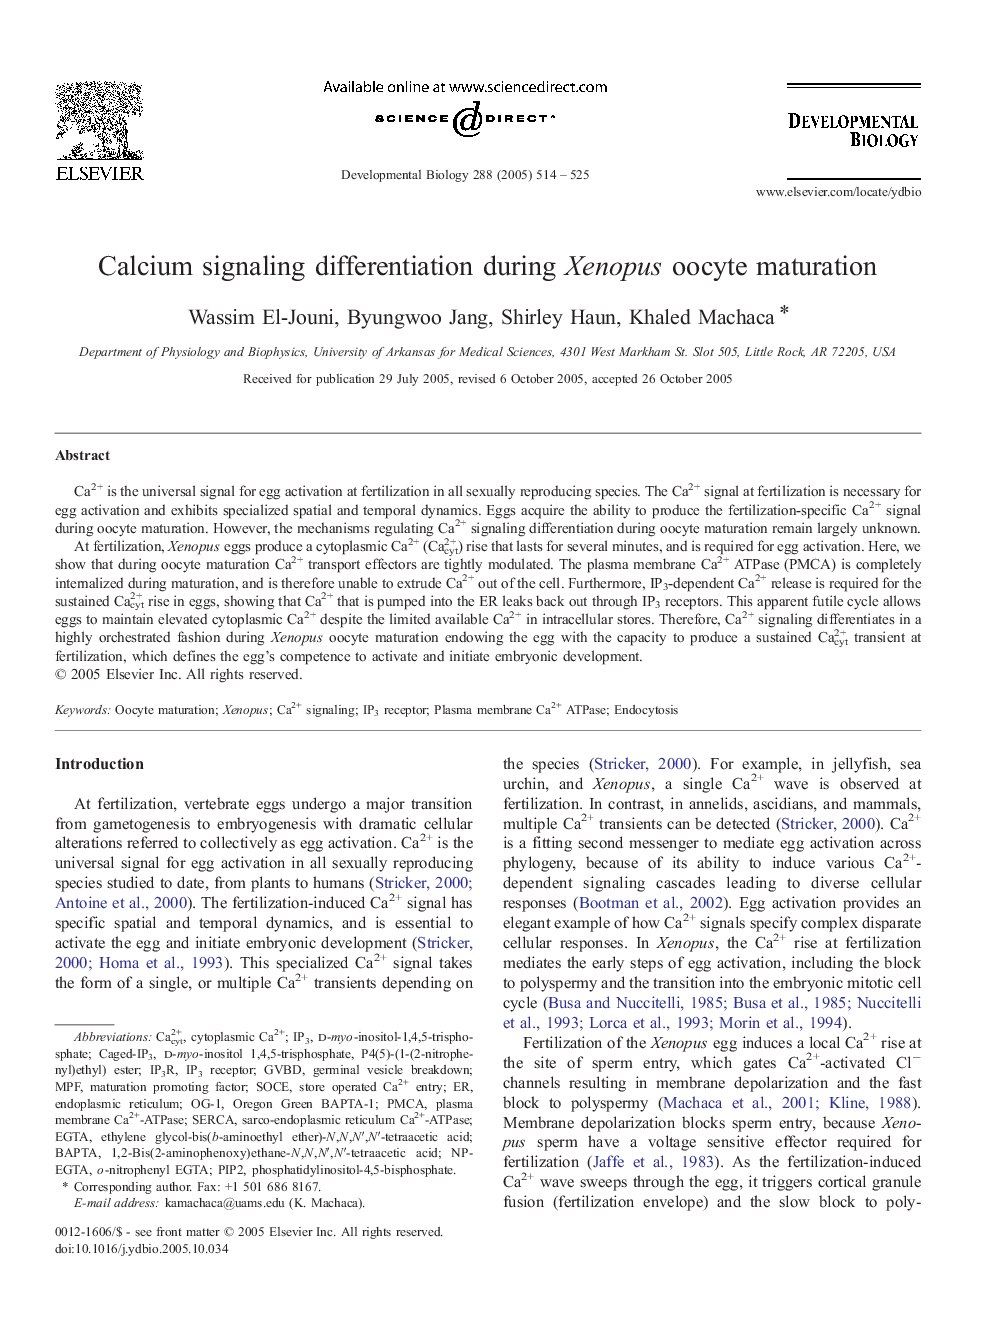 Calcium signaling differentiation during Xenopus oocyte maturation